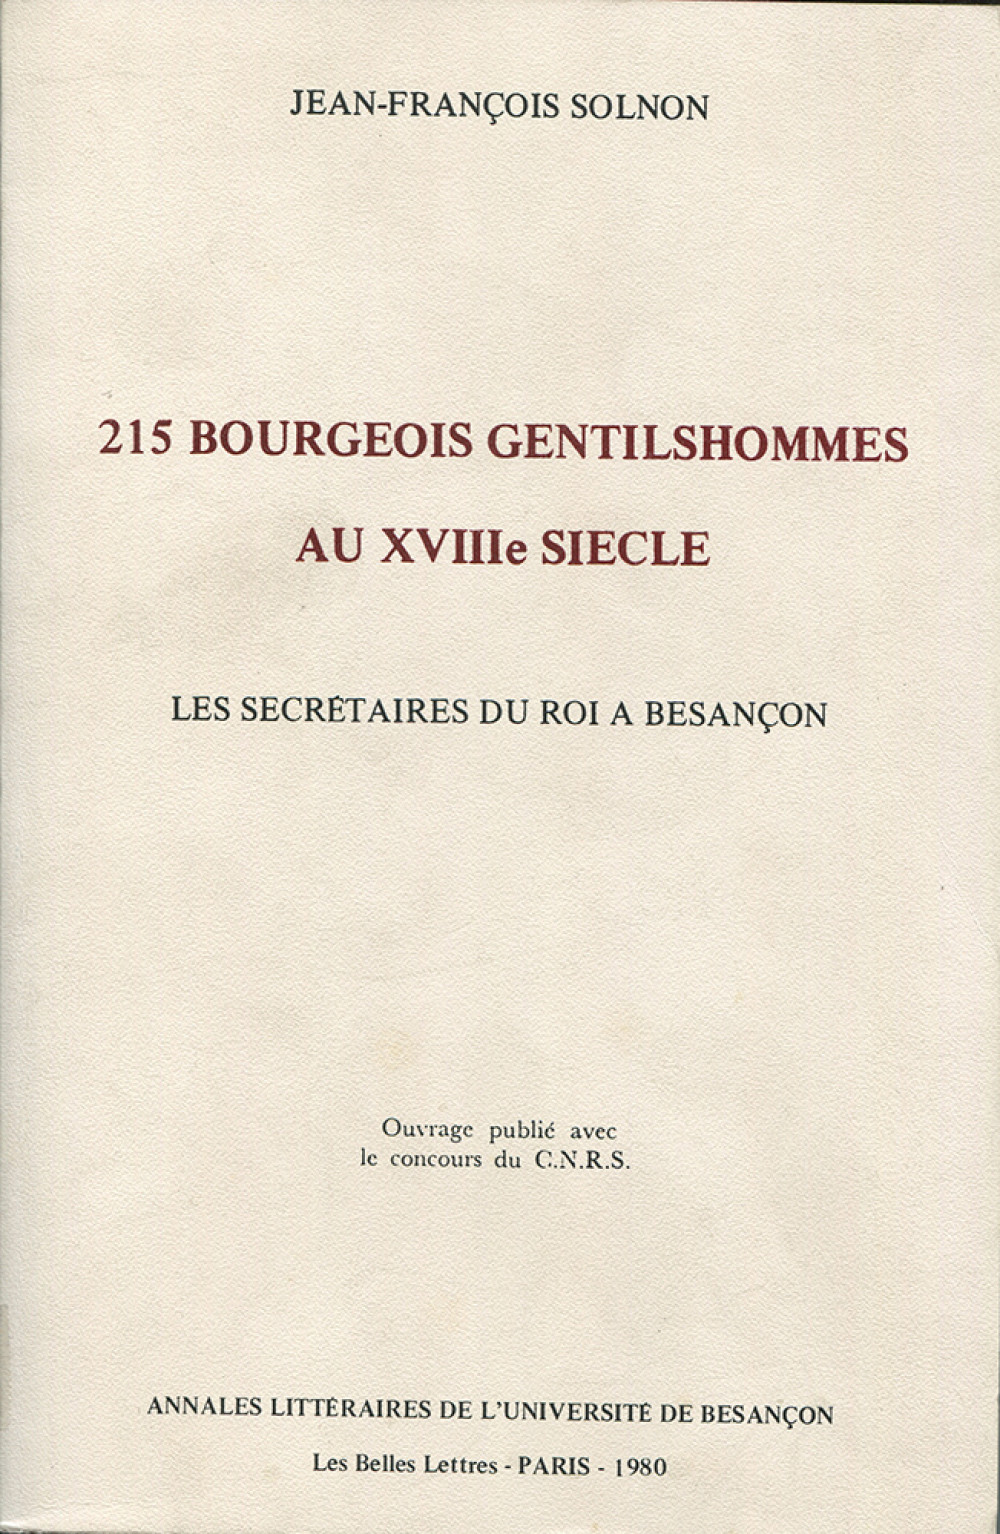 215 bourgeois gentilshommes au XVIIIe siècle